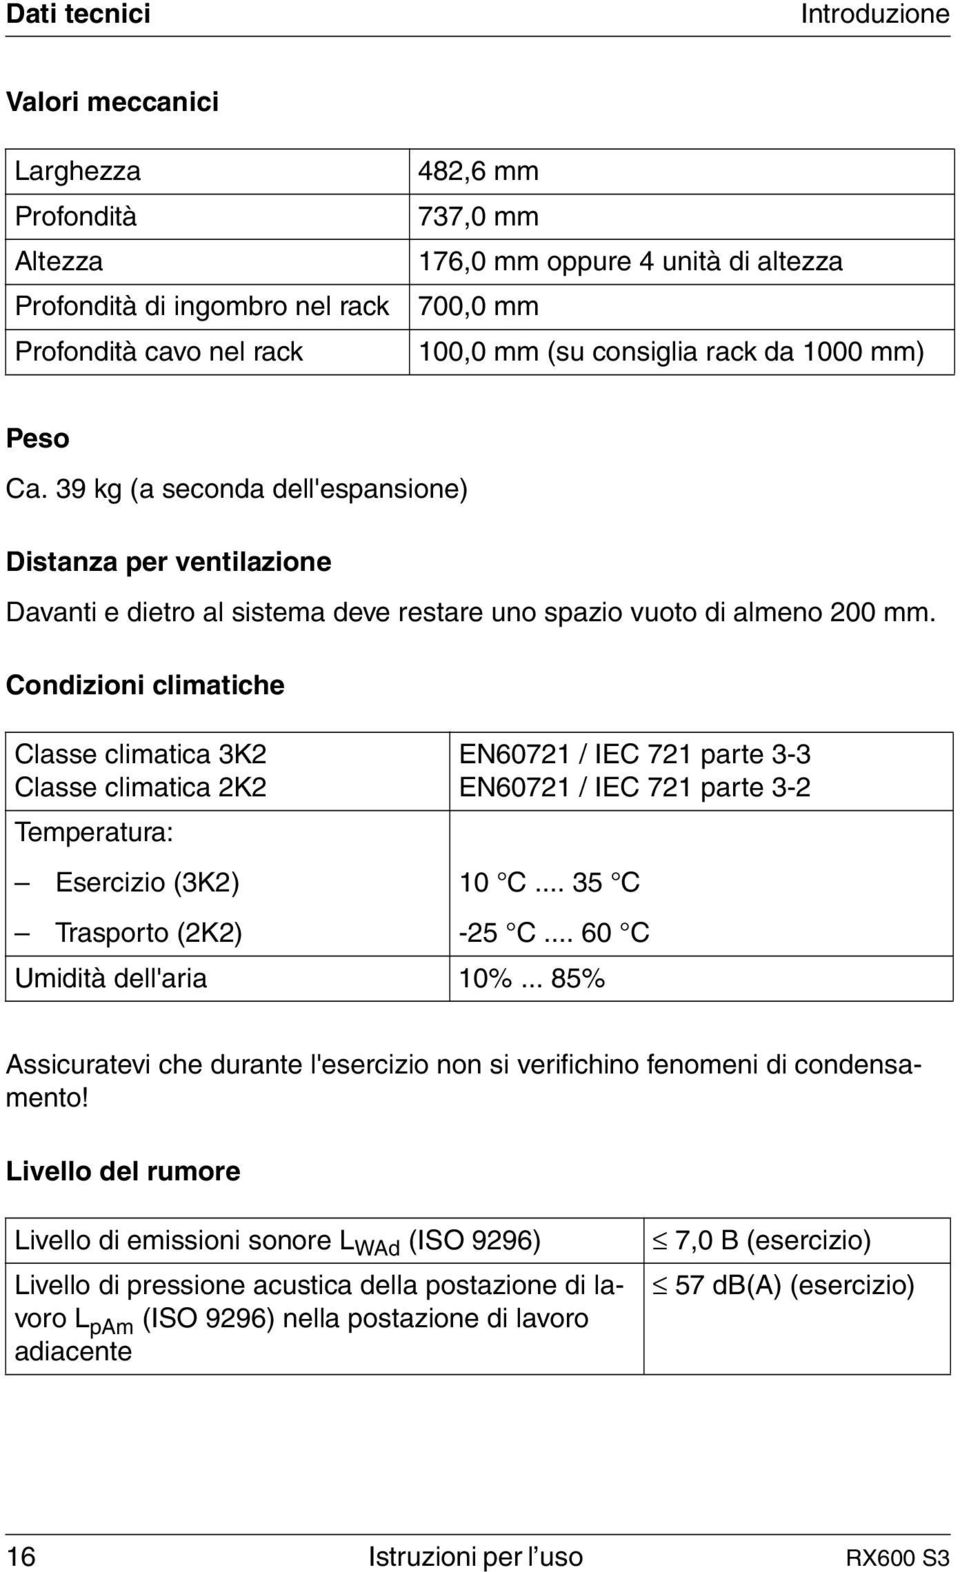 Condizioni climatiche Classe climatica 3K2 Classe climatica 2K2 Temperatura: Esercizio (3K2) EN60721 / IEC 721 parte 3-3 EN60721 / IEC 721 parte 3-2 10 C... 35 C Trasporto (2K2) -25 C.